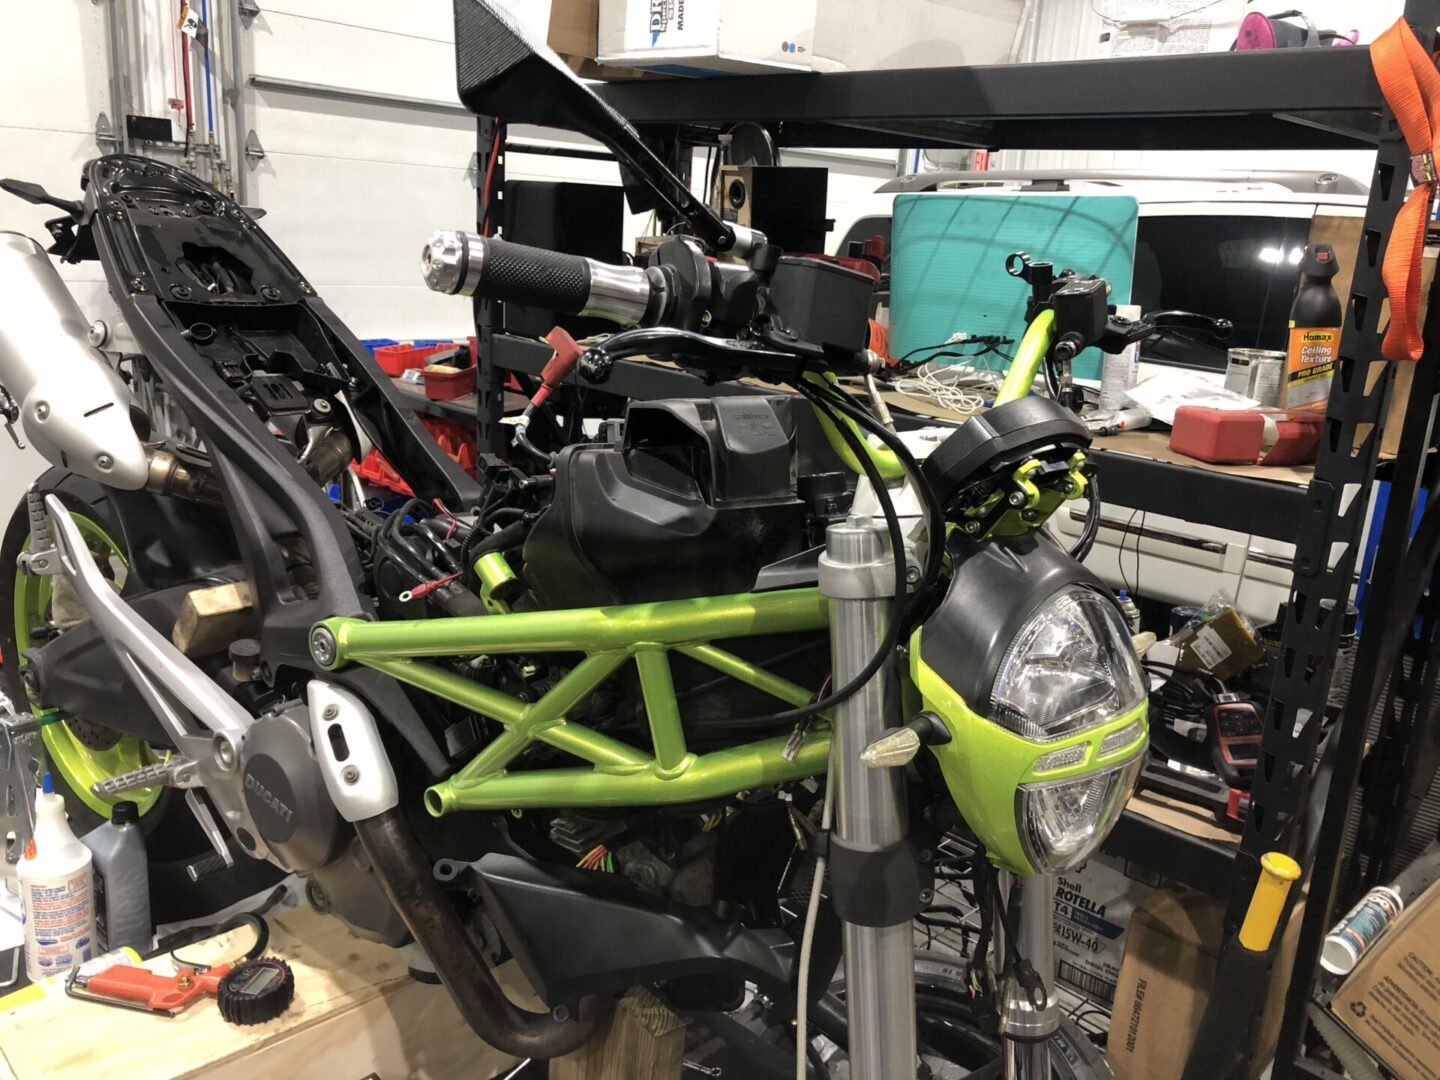 The bike, Custom fabricayed auto parts